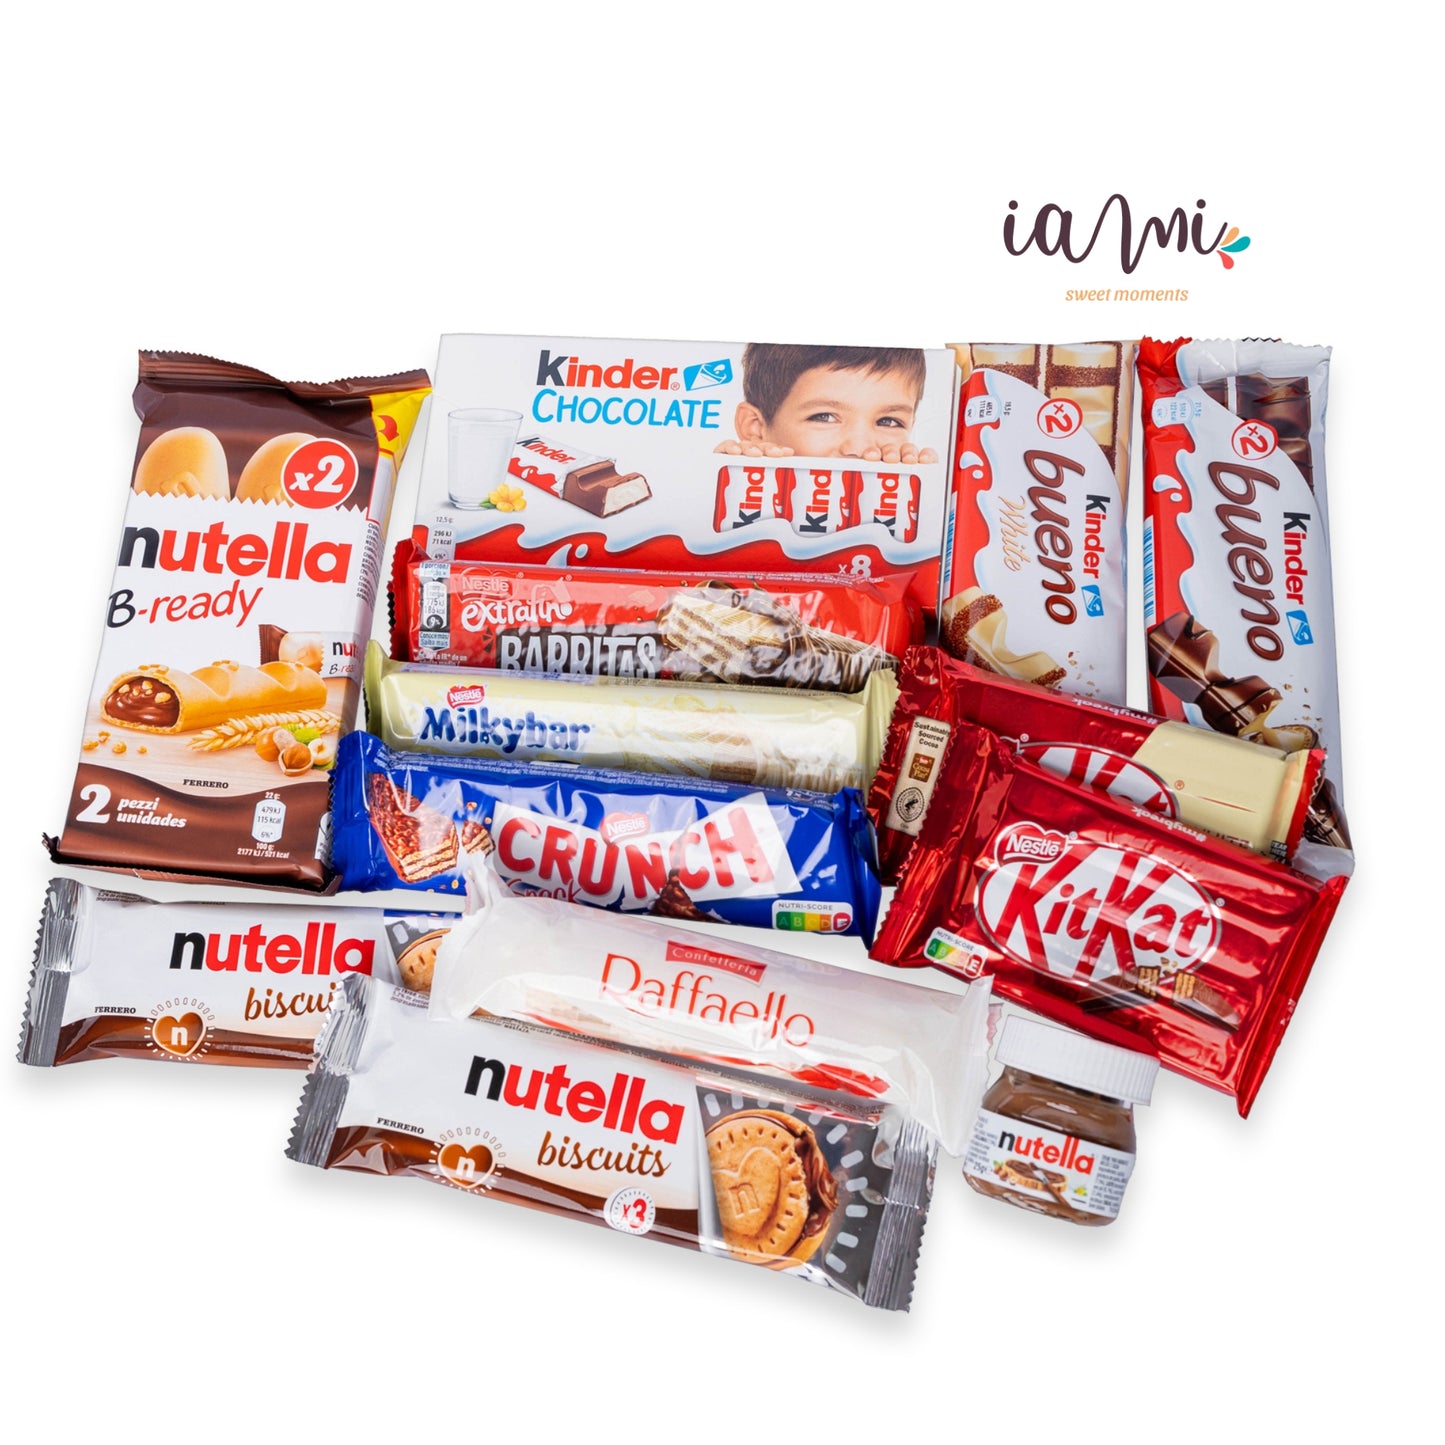 Bandeja Regalo Mega Pack de Chocolates Kinder - Nutella - Rafaello - Nestle. +15 Unid.